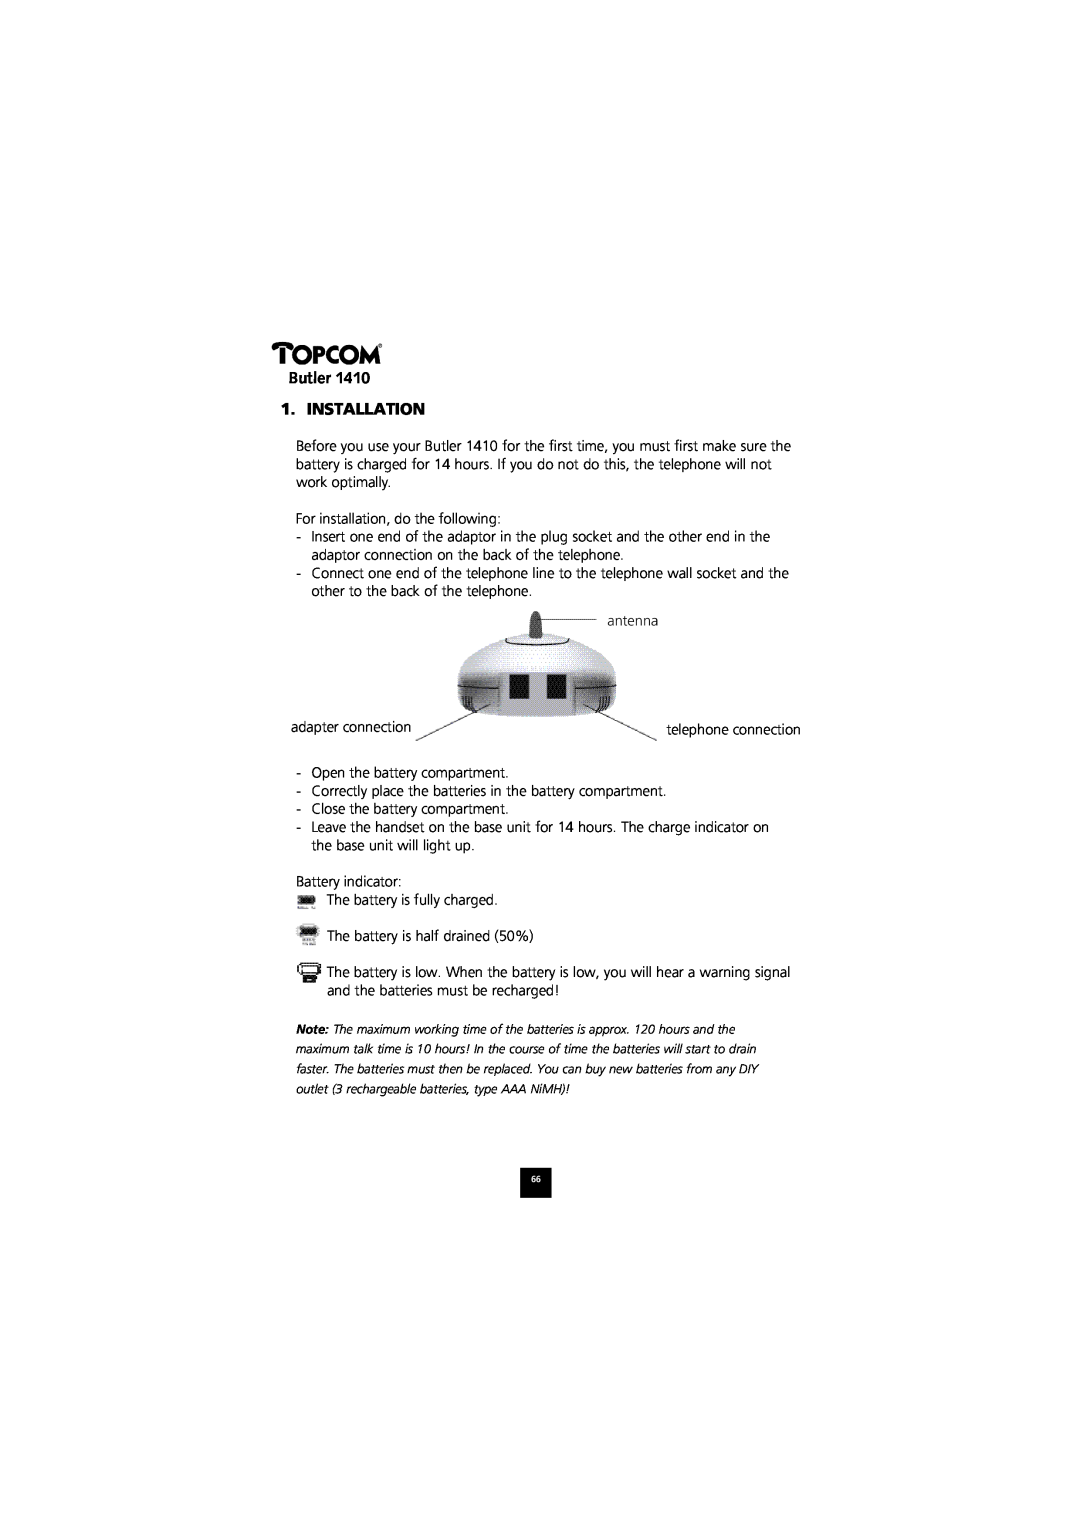 Topcom 1410 manual Butler 1. INSTALLATION, For installation, do the following 